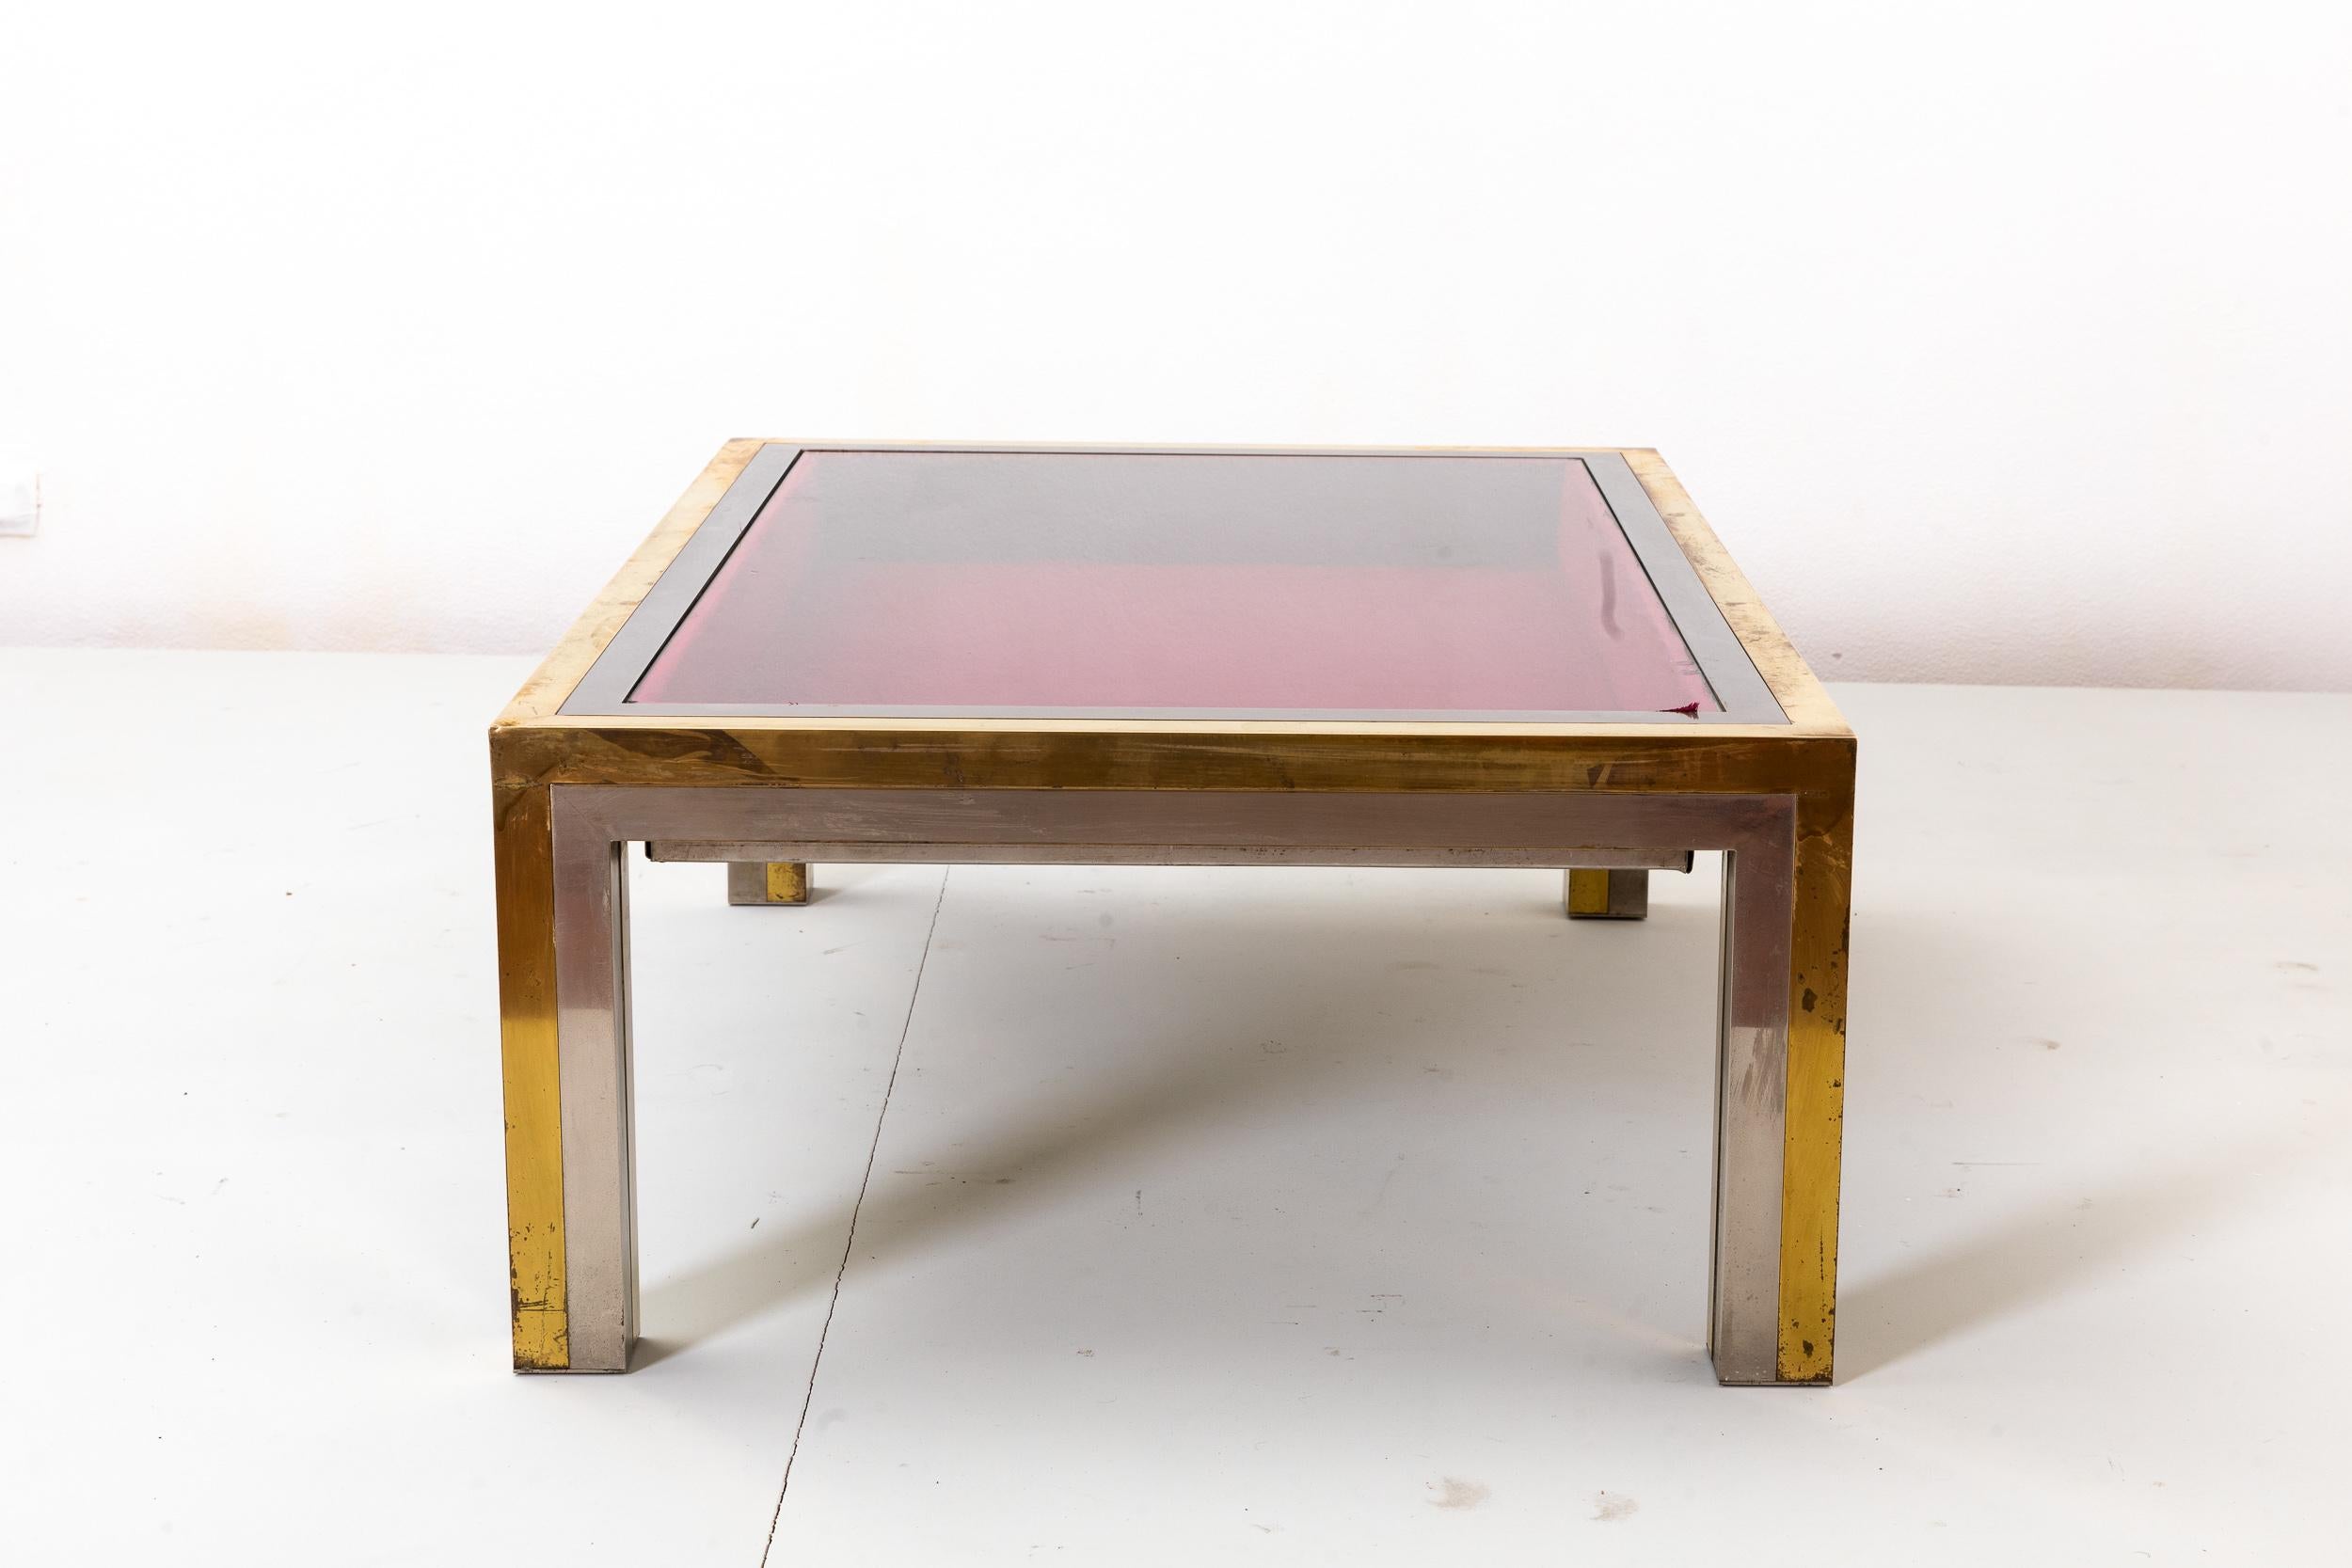 Romeo Rega Prod, Italy, c. 1970 Low Display Table For Sale 3